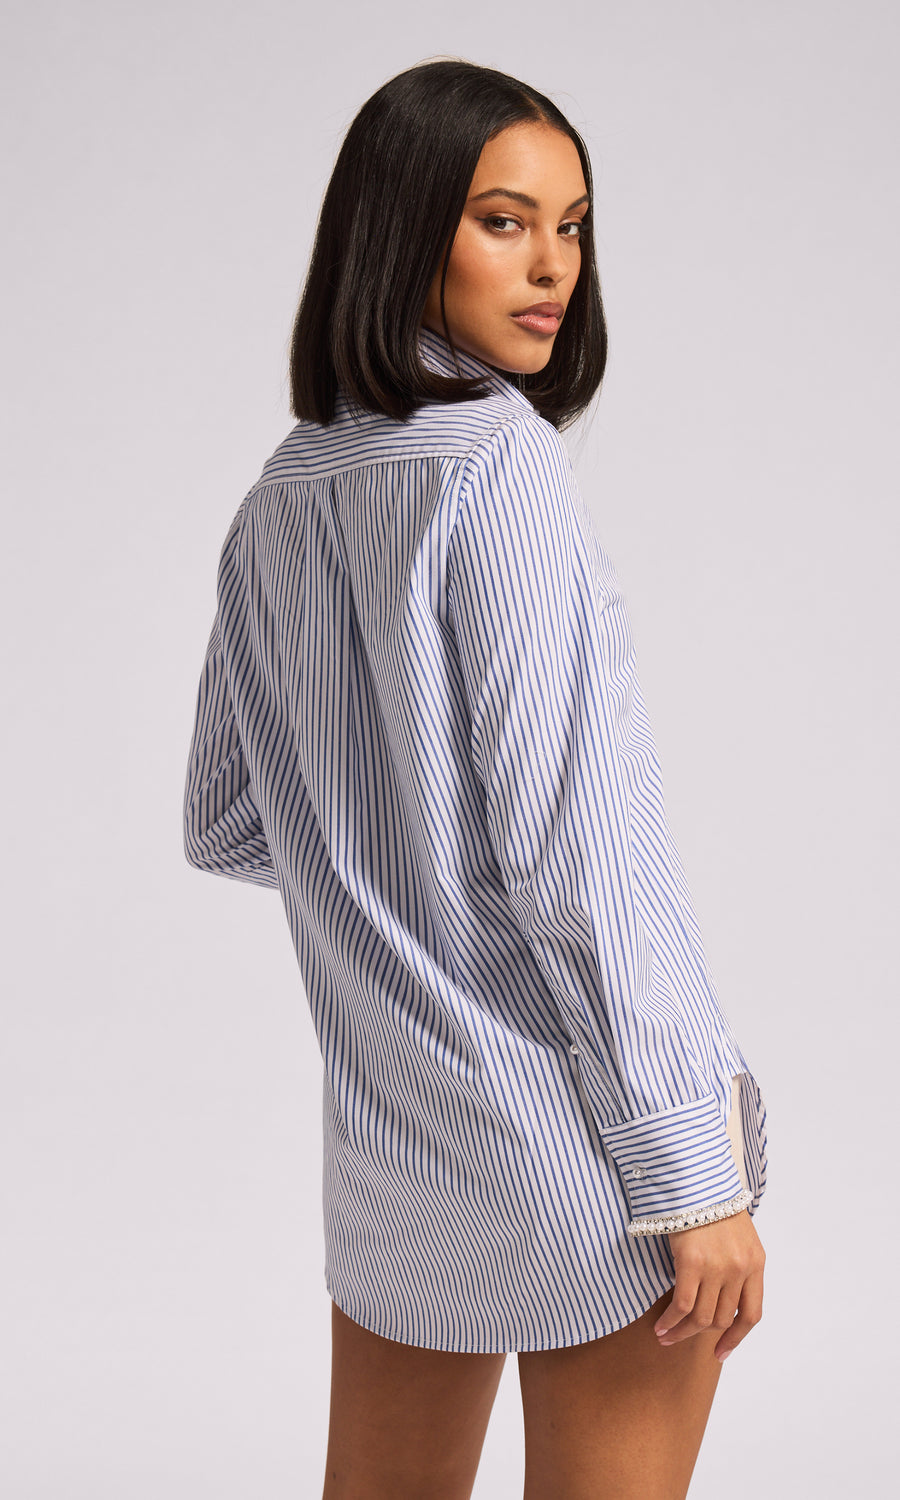 Fiore Embellished Pinstripe Shirt - White/Light Blue